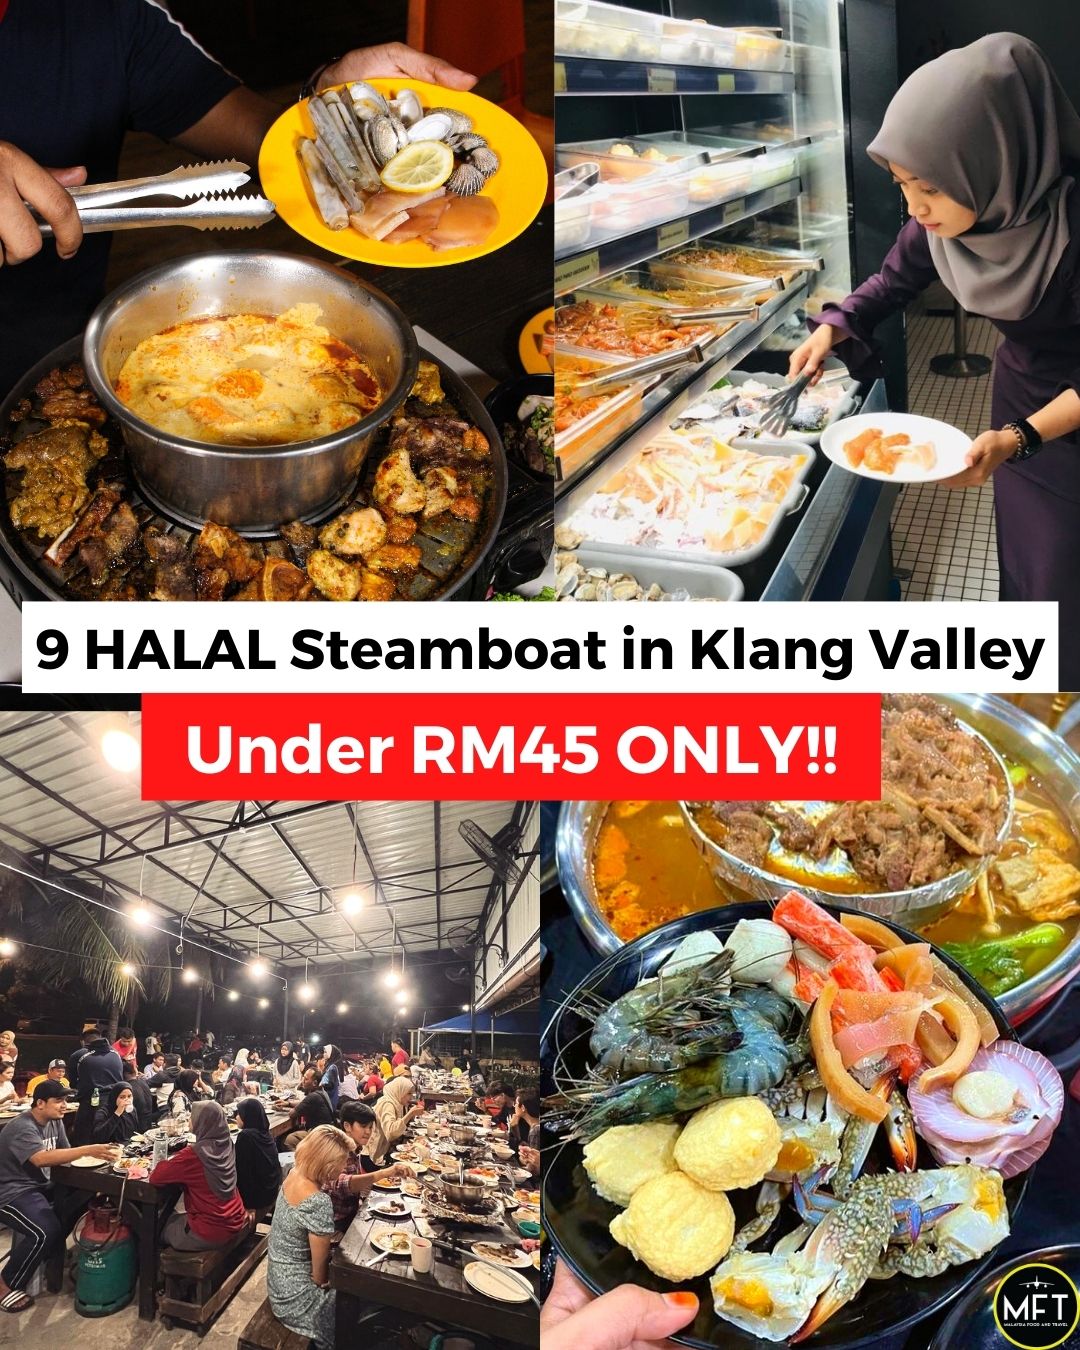 9 HALAL Steamboat in Klang Valley Under RM45!